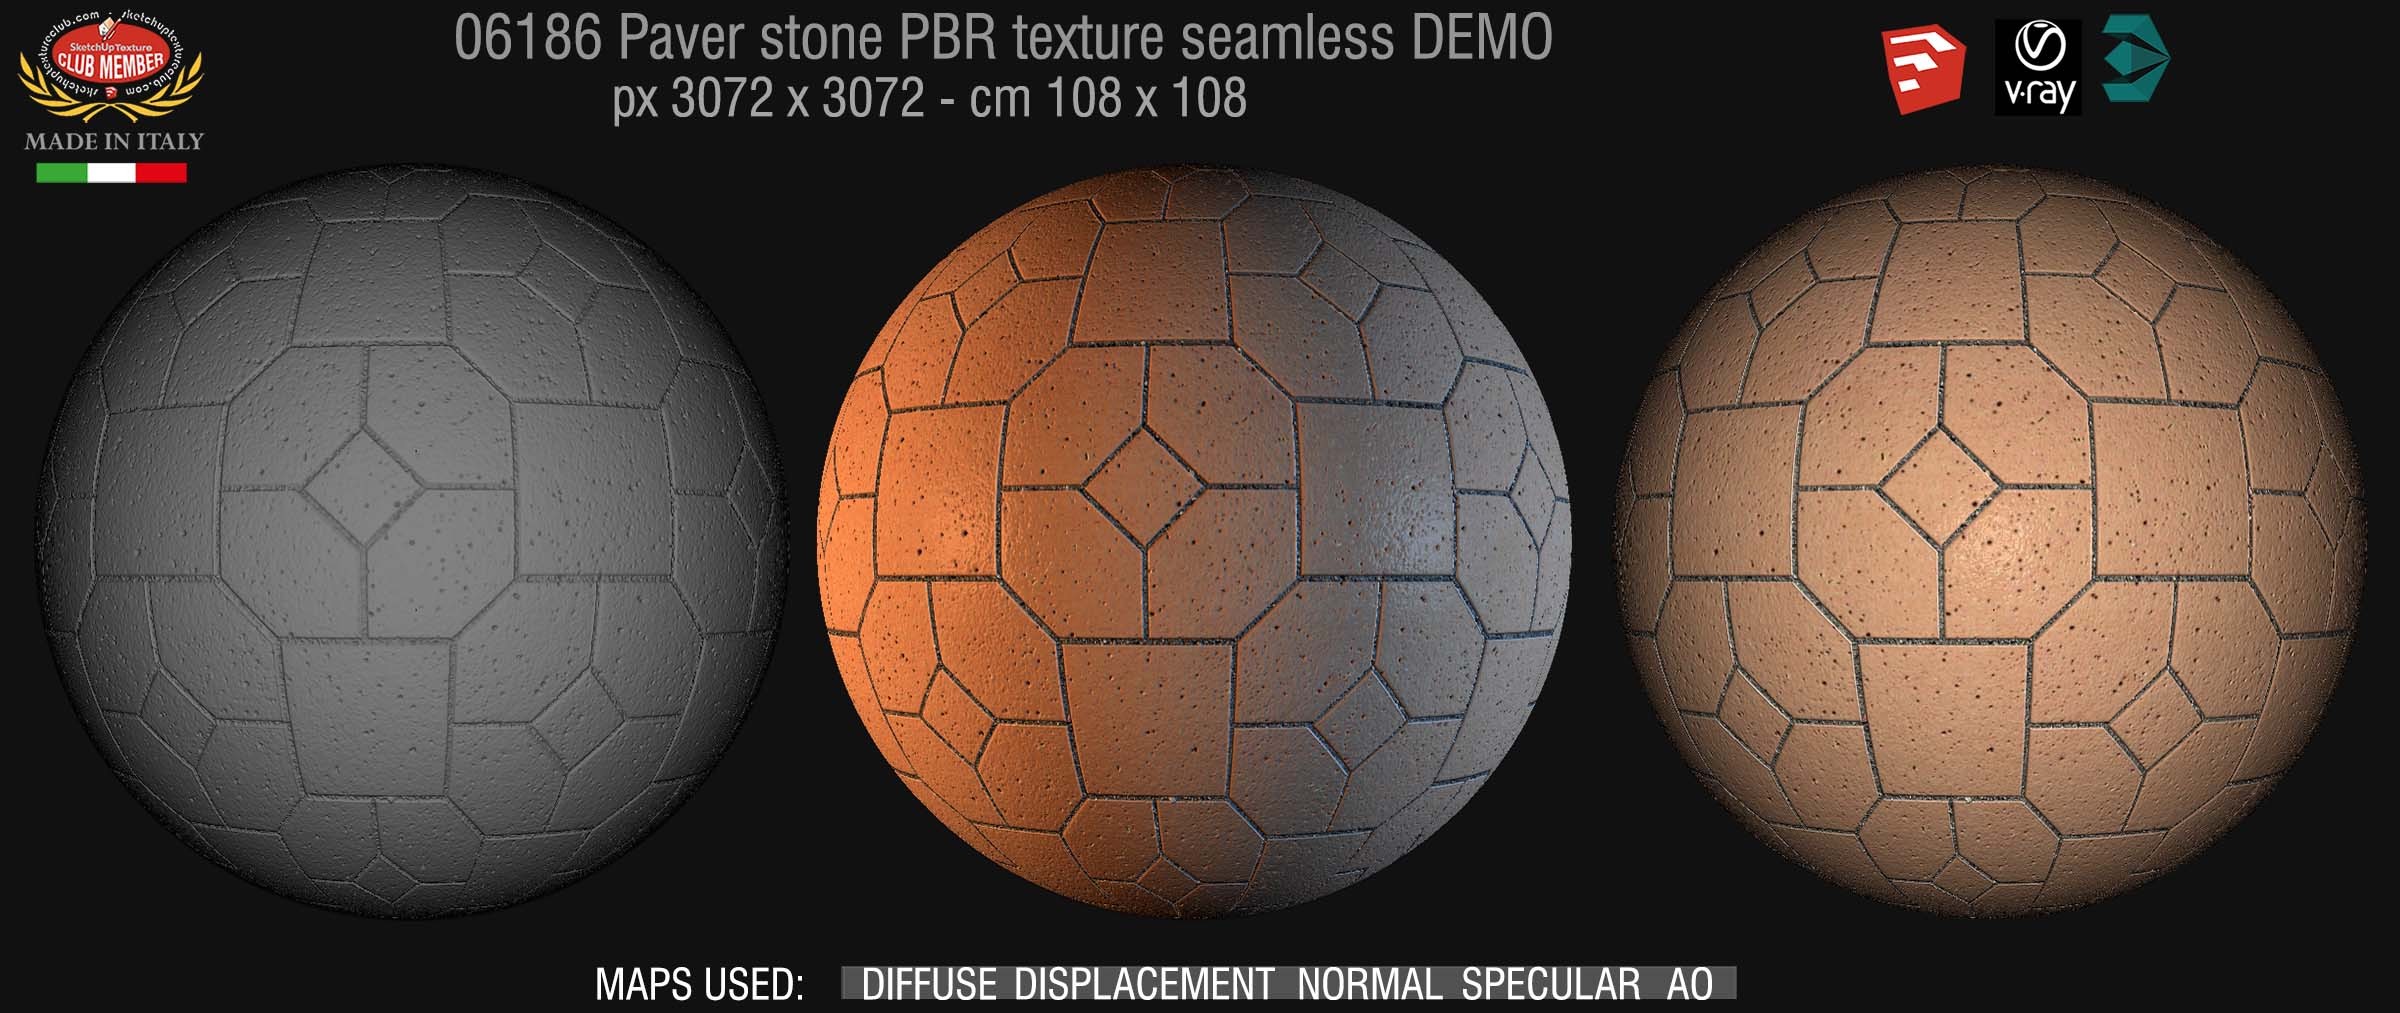 06186 Pavers stone PBR texture seamless DEMO